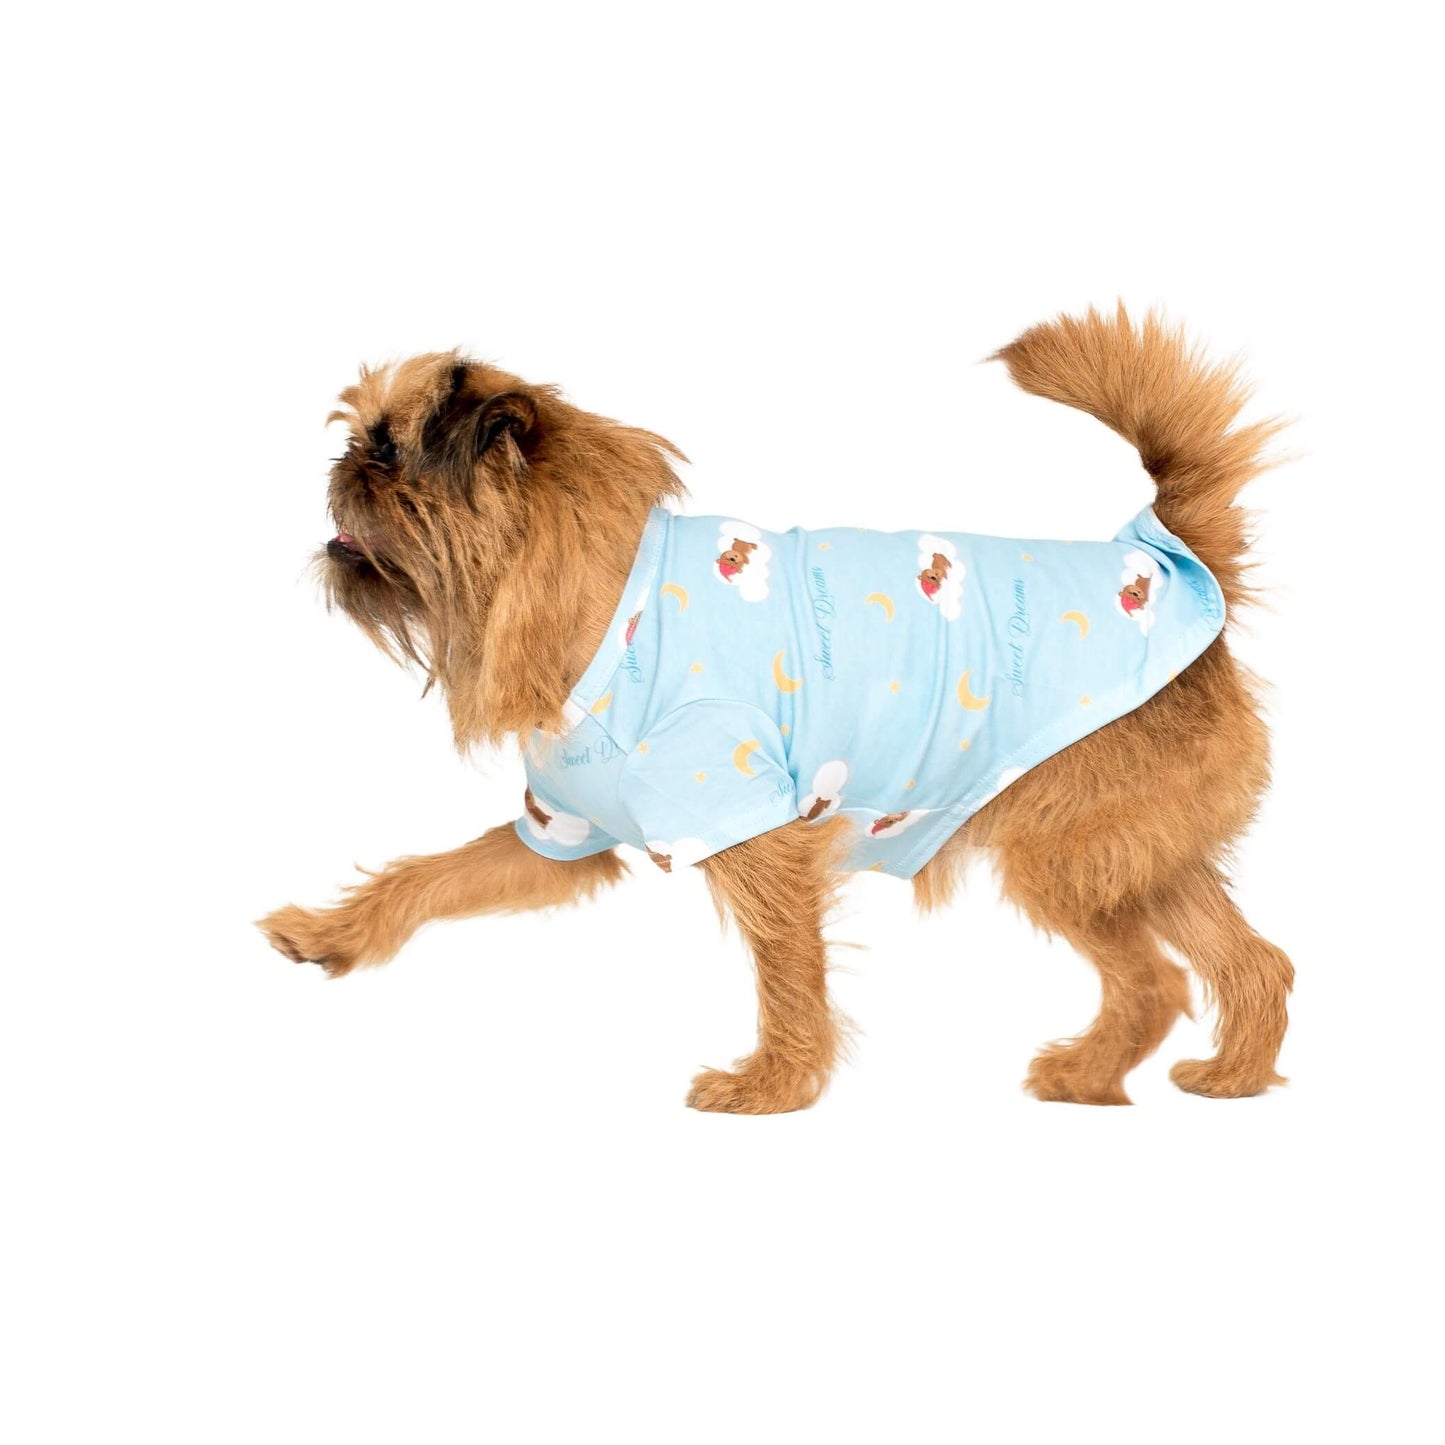 Little dreamer dog pyjamas being worn by a Griffon.